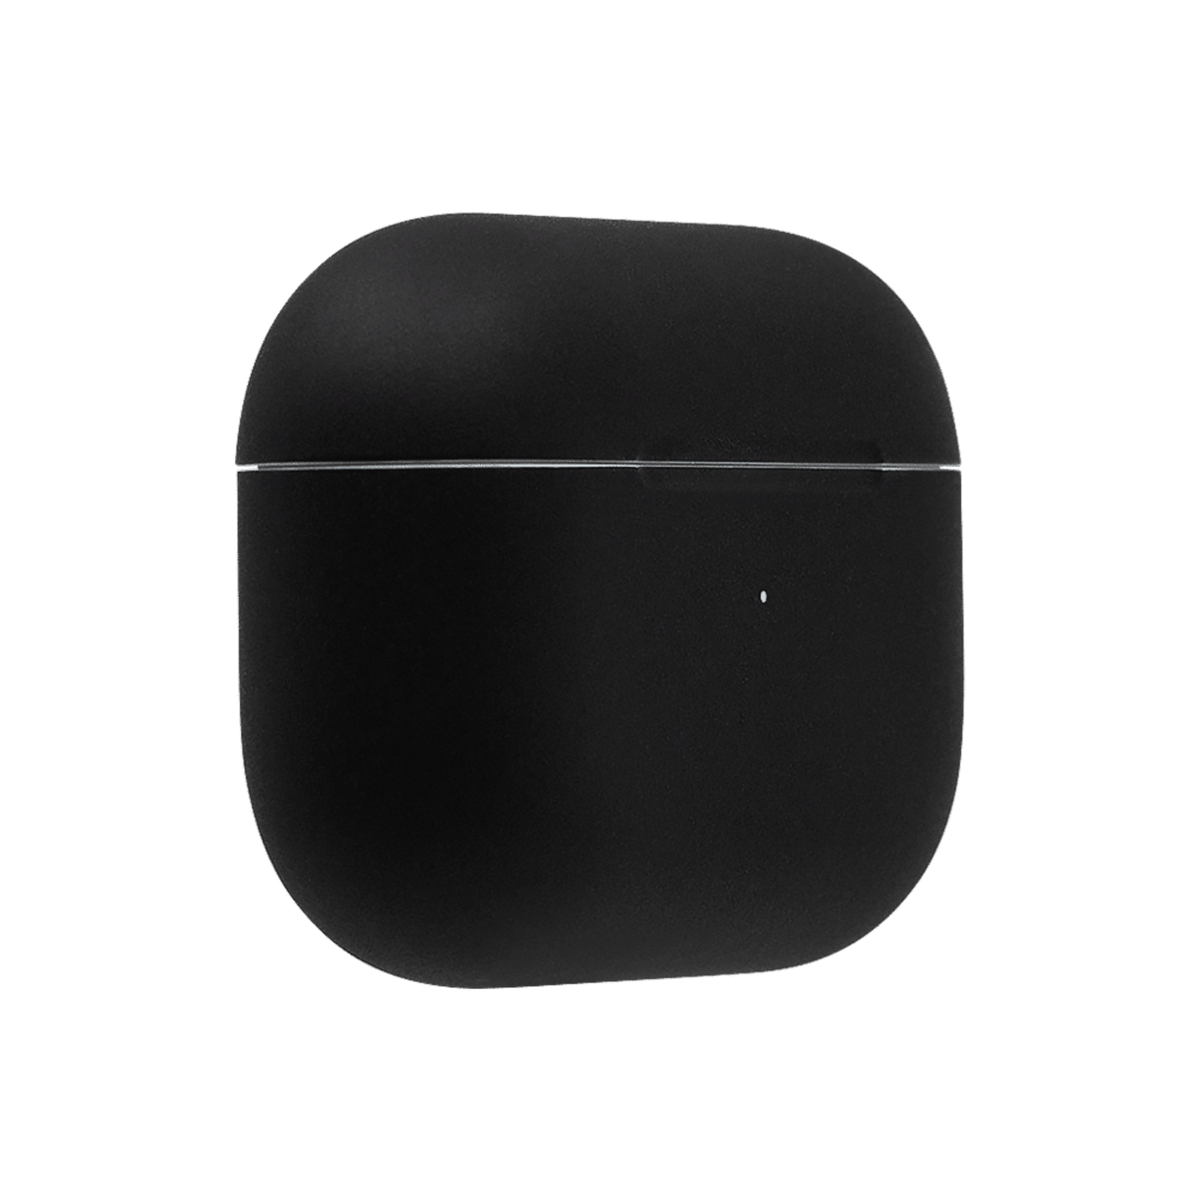 Switch Apple AirPods Pro 2, Jet Black Matte